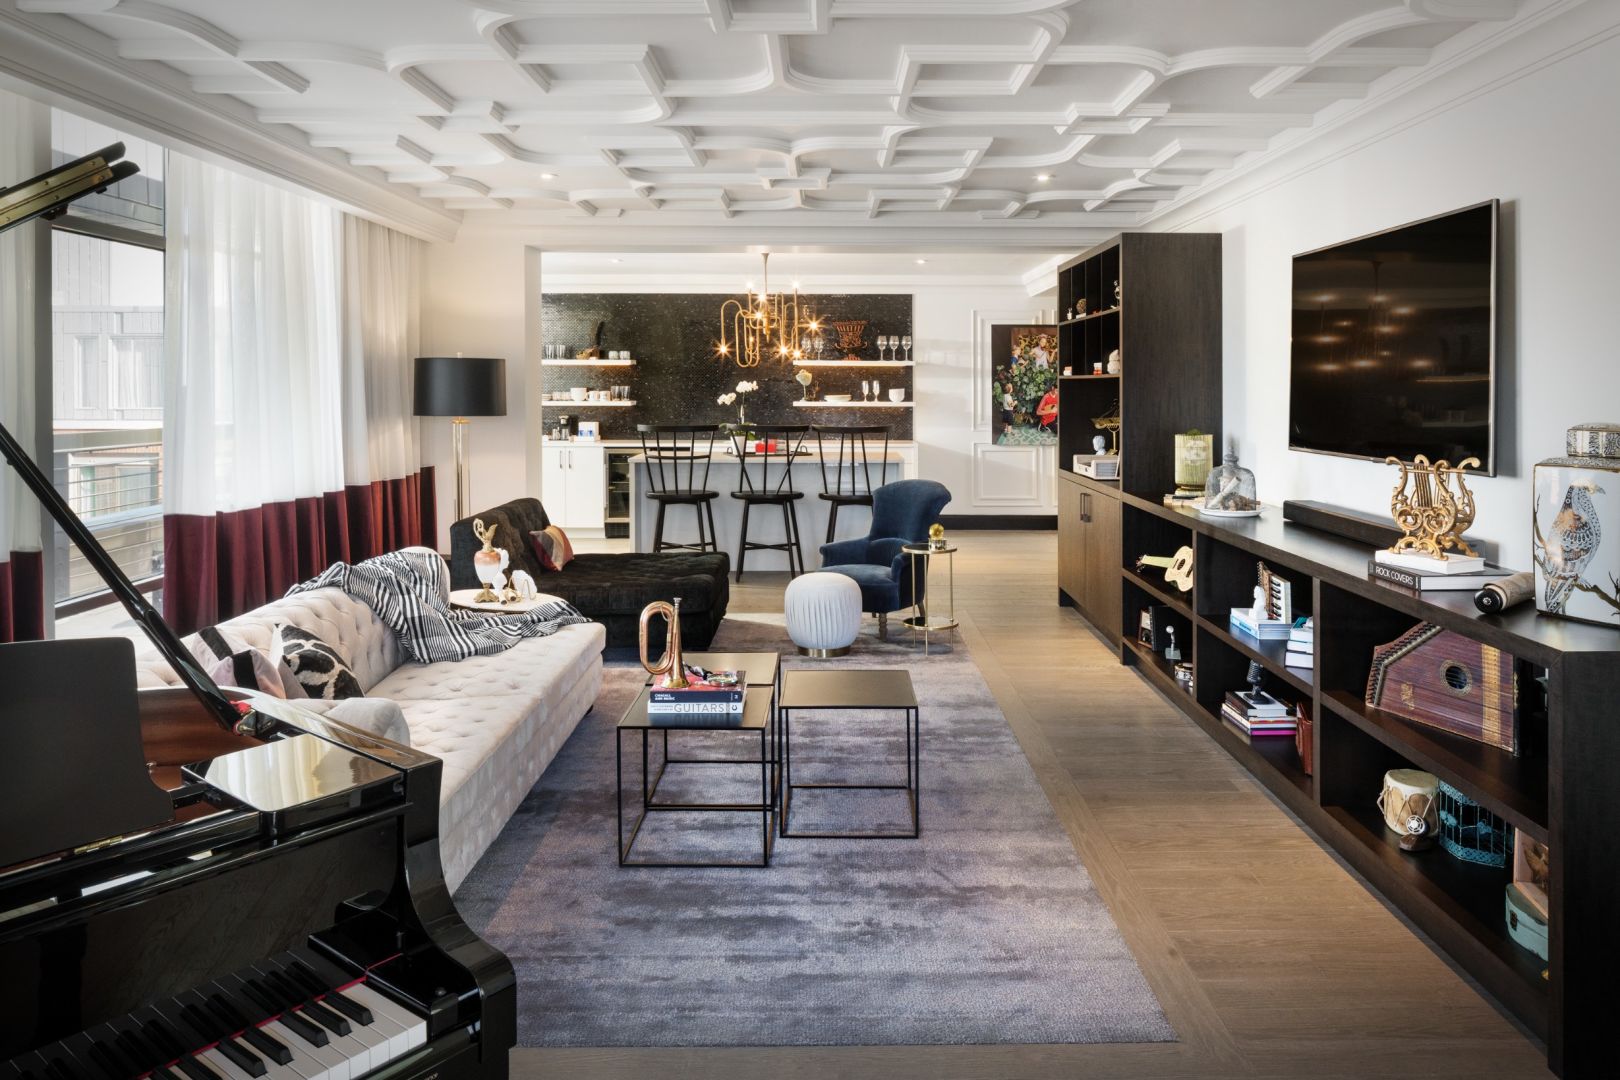 Luxury Hotels for Vinyl Lovers